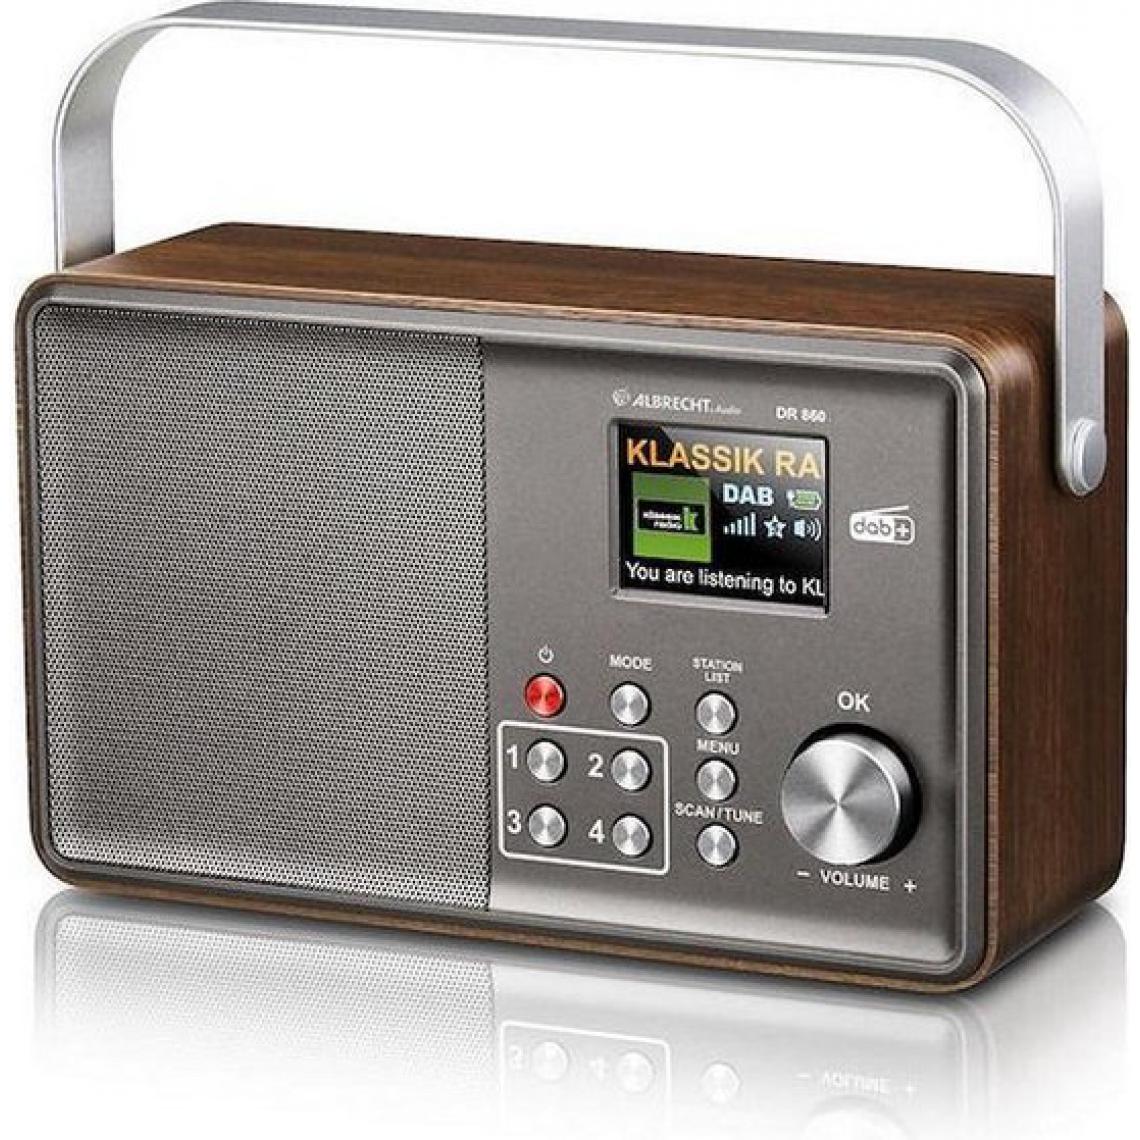 Albrecht - Albrecht radio dab+ dr 860 walnut - Radio